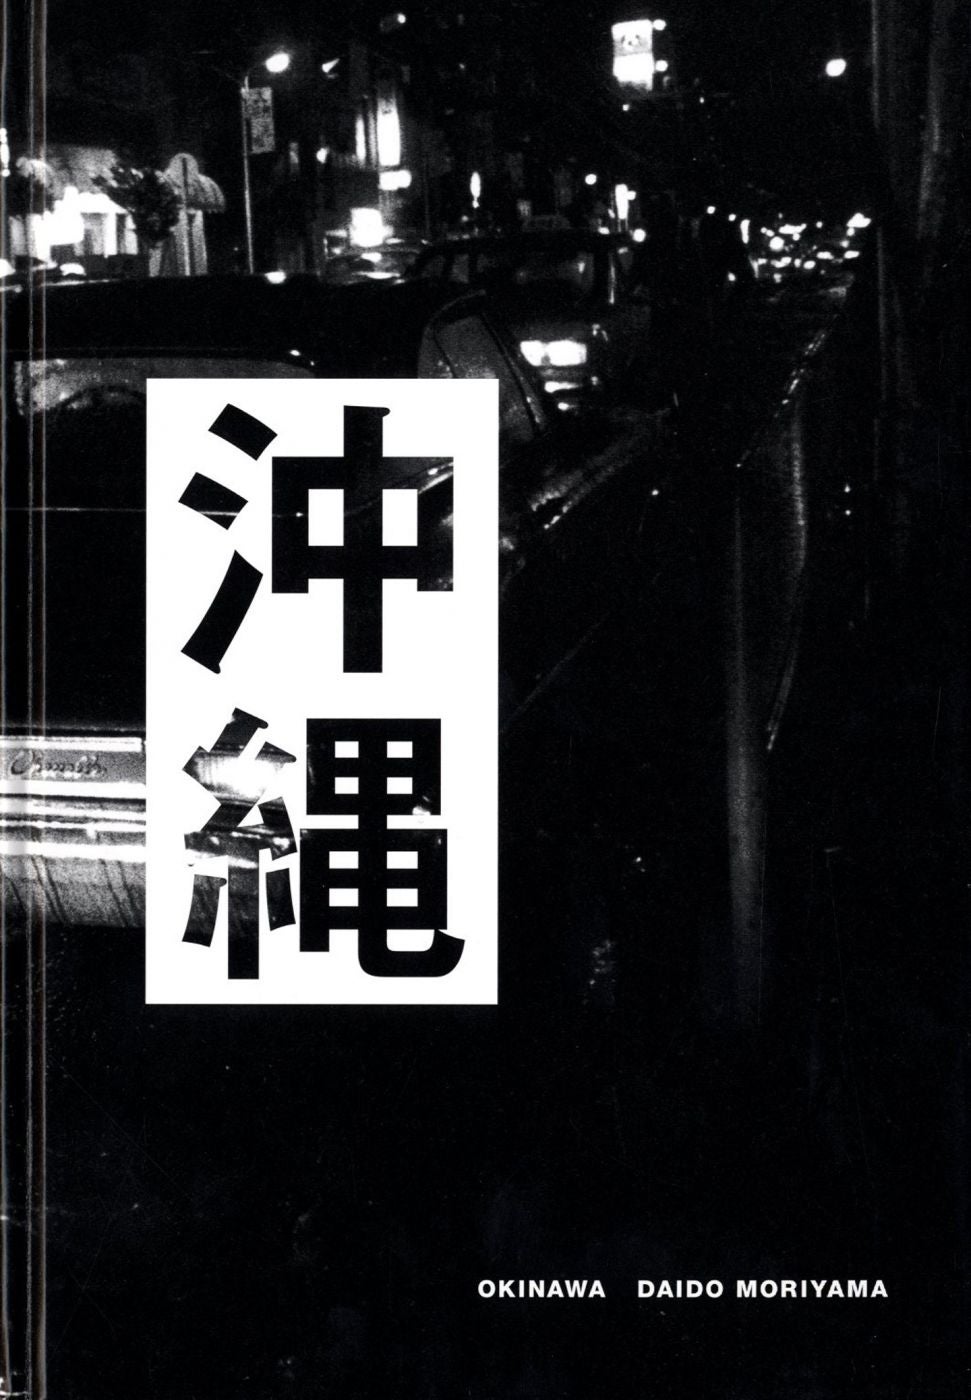 Daido Moriyama: Okinawa (Super Labo), Limited Edition (with Gelatin Silver Print, "Cabaret Hawaii" Variant) [SIGNED]